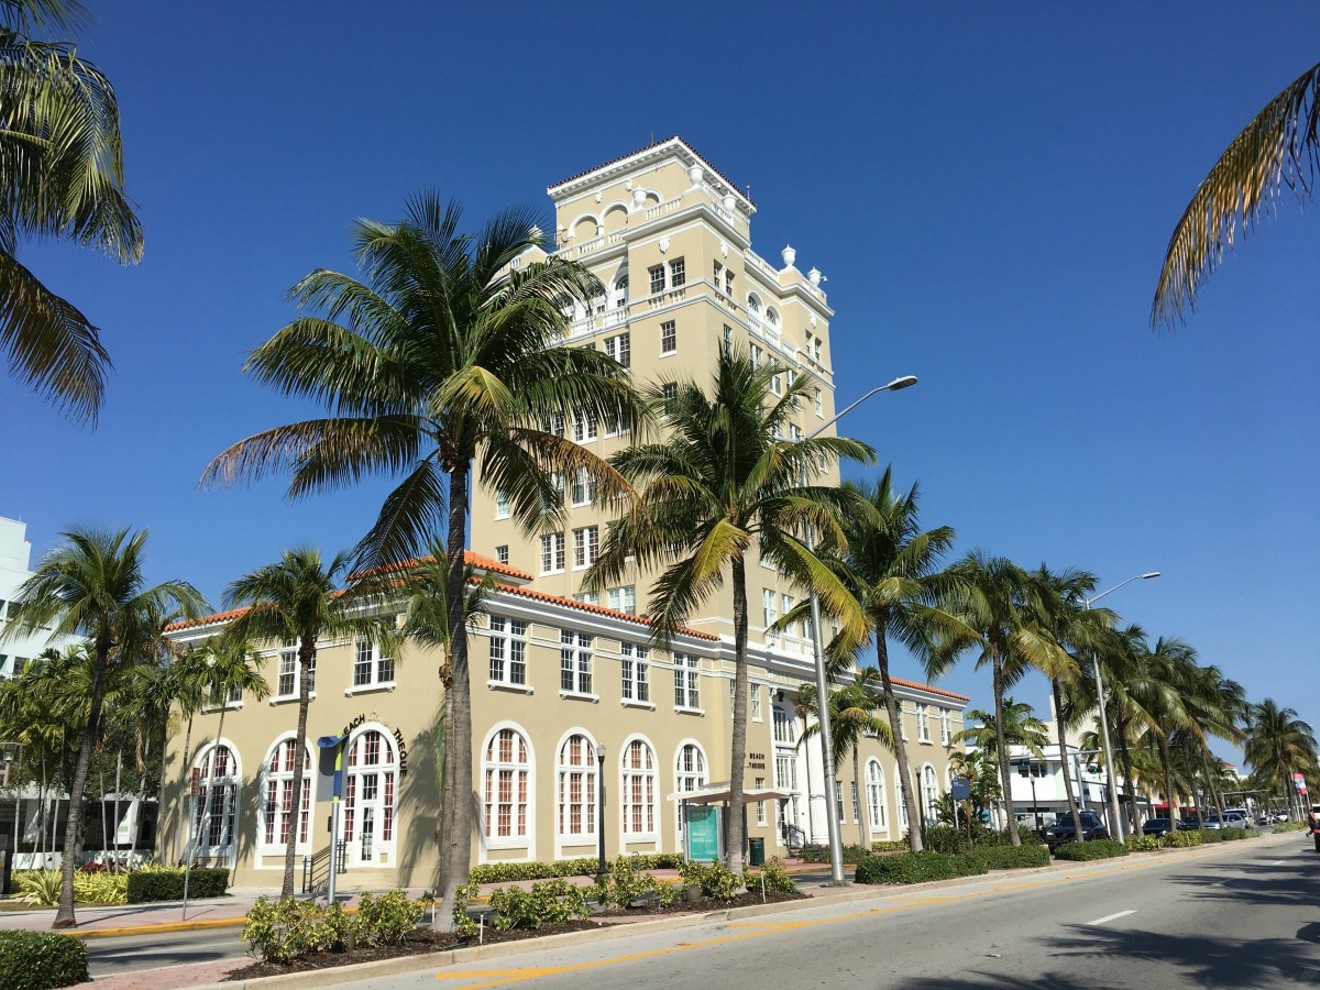 Miami Beach's old city hall